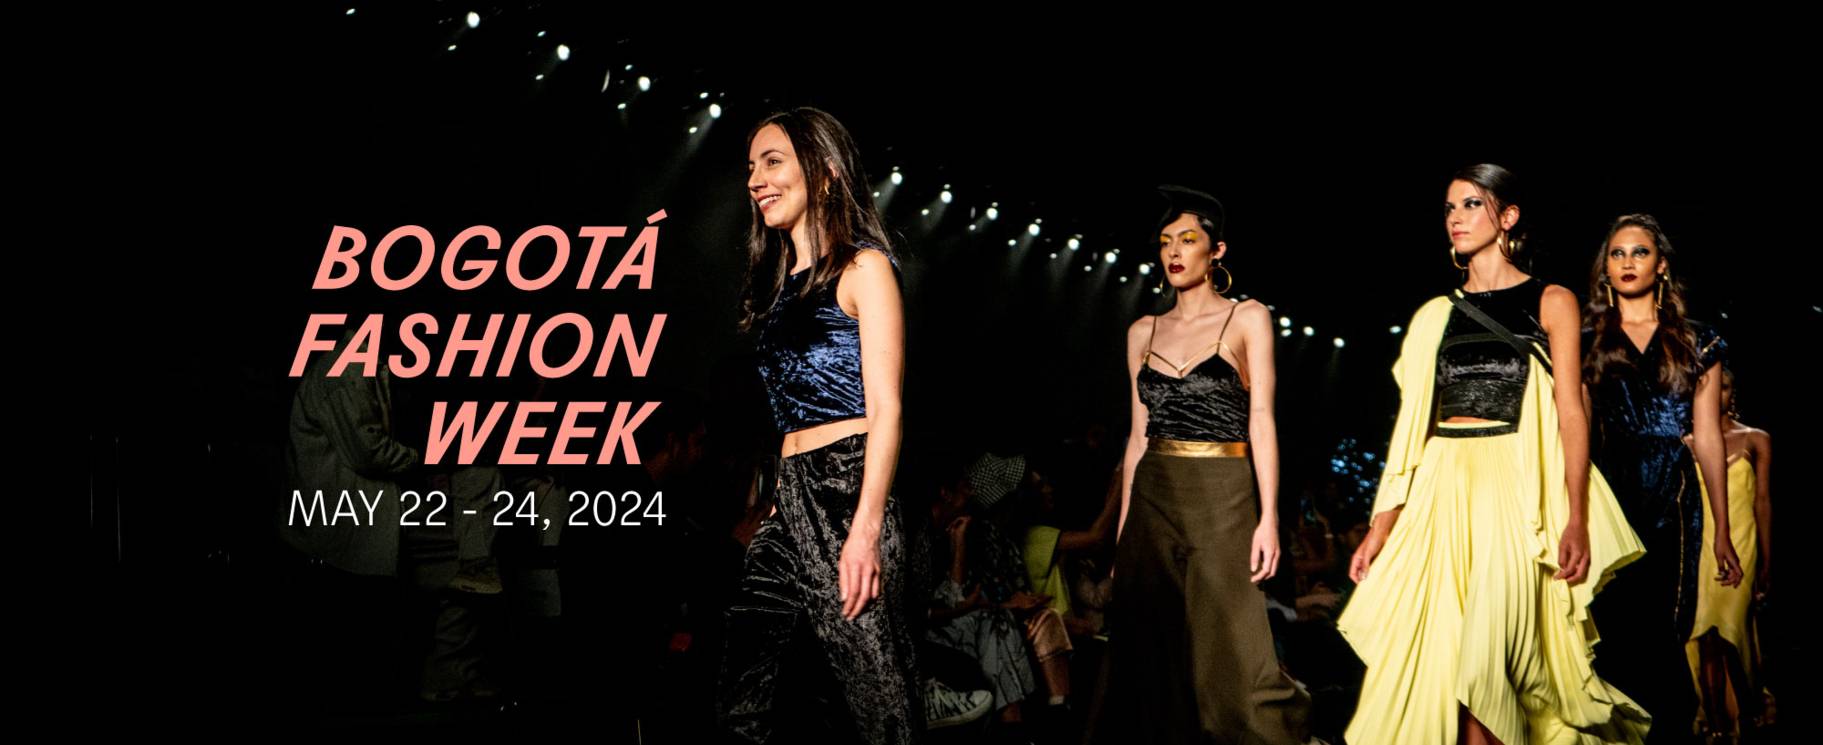 Bogota Fashion Week 2024 Save the date